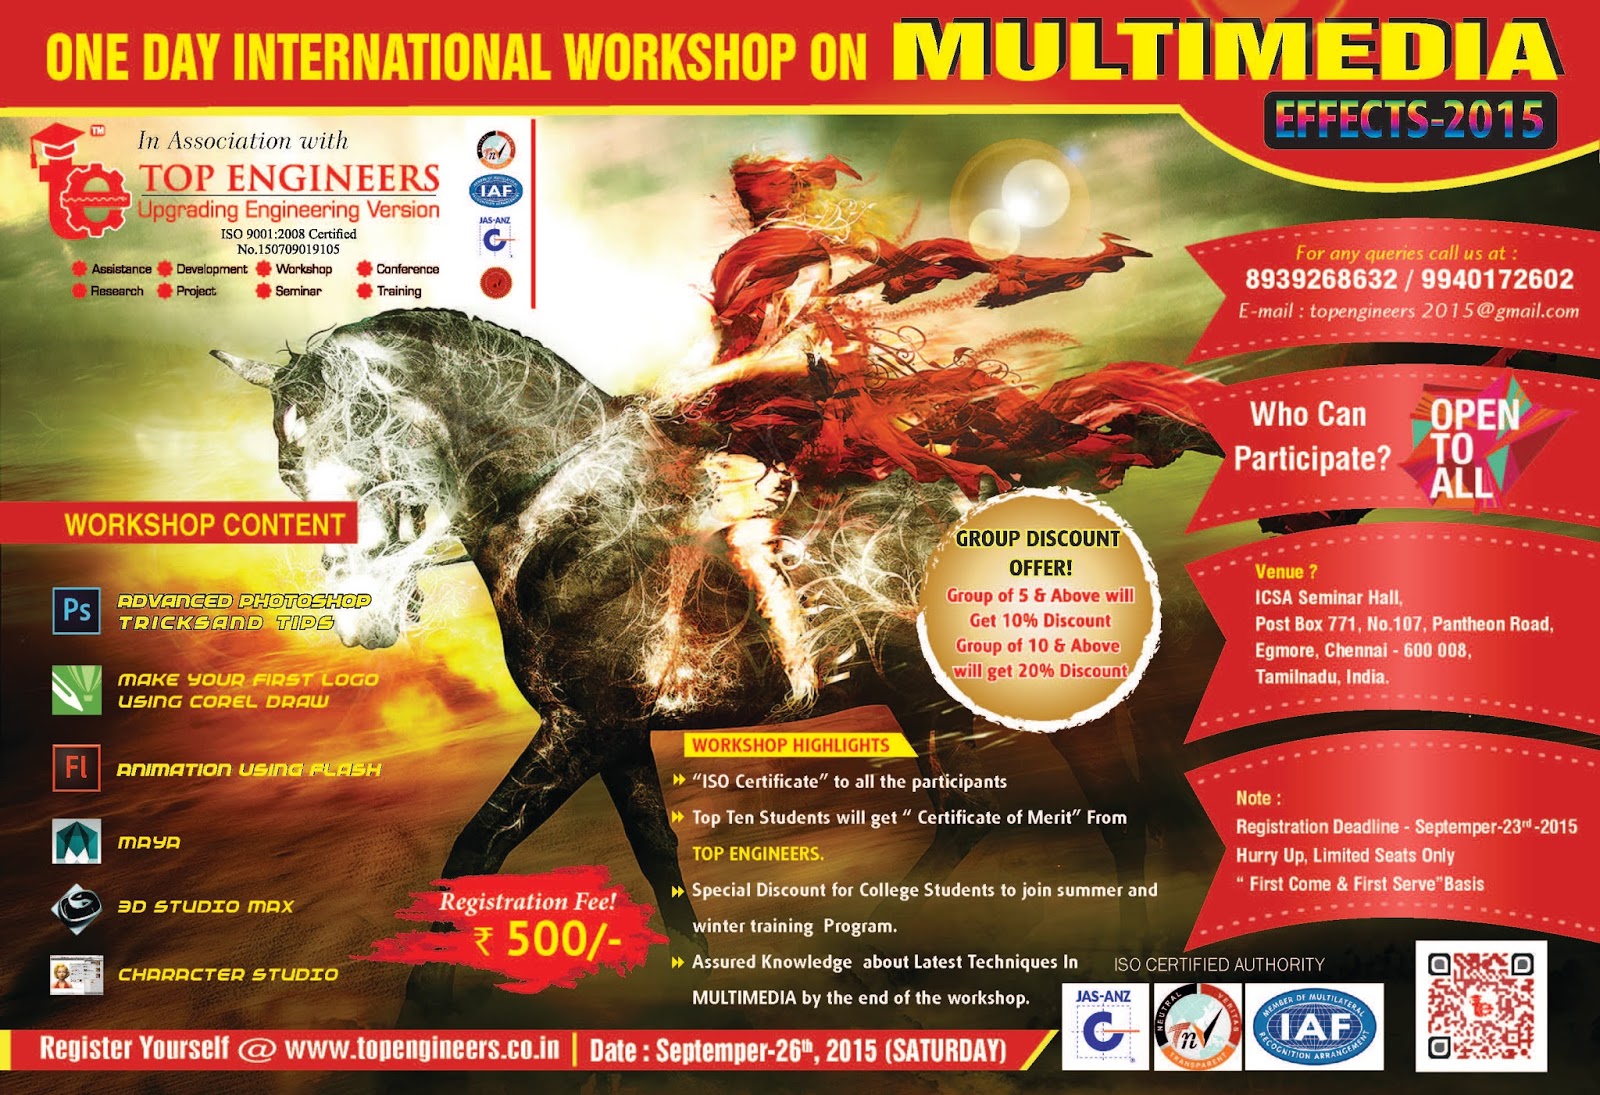 International Workshop on Multimedia - Effects 2015